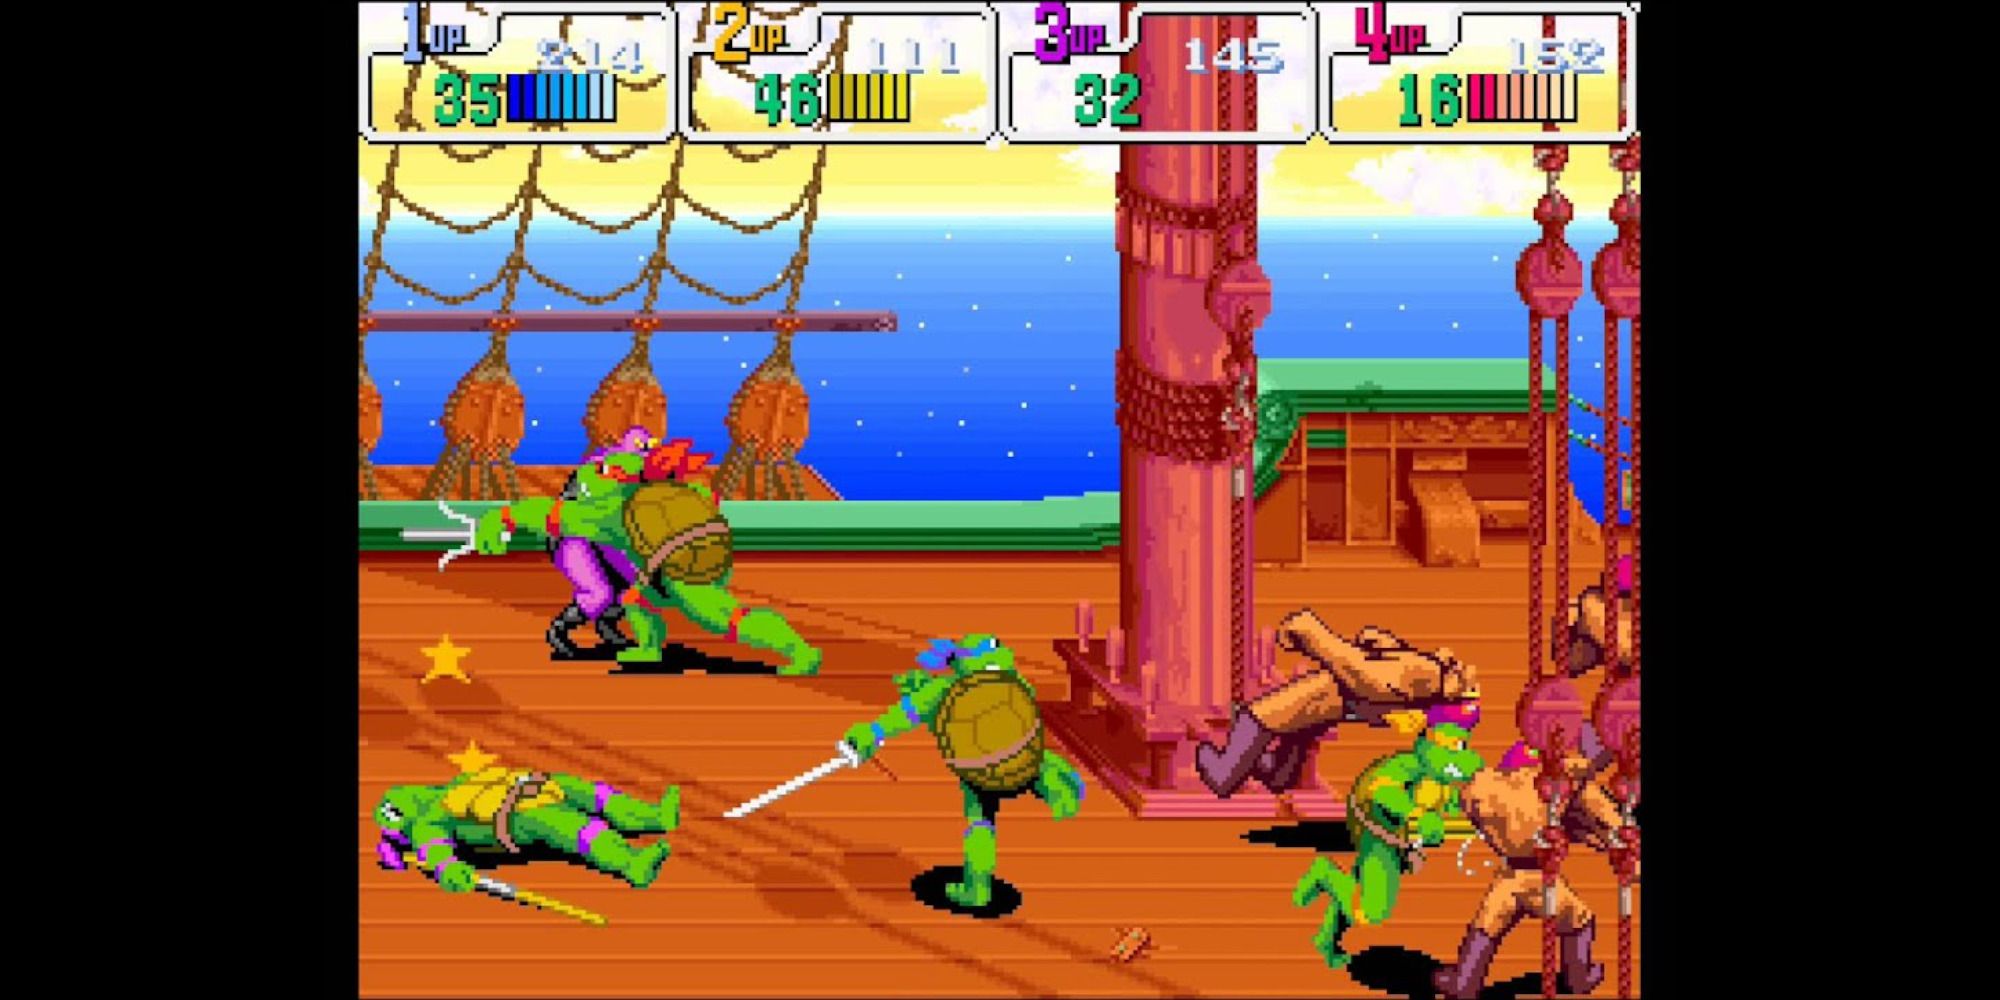 Teenage Muntant Ninja Turtles Turtles In Time with Donatello, Rapheal, Leonardo, and Michealango beating up some thugs.